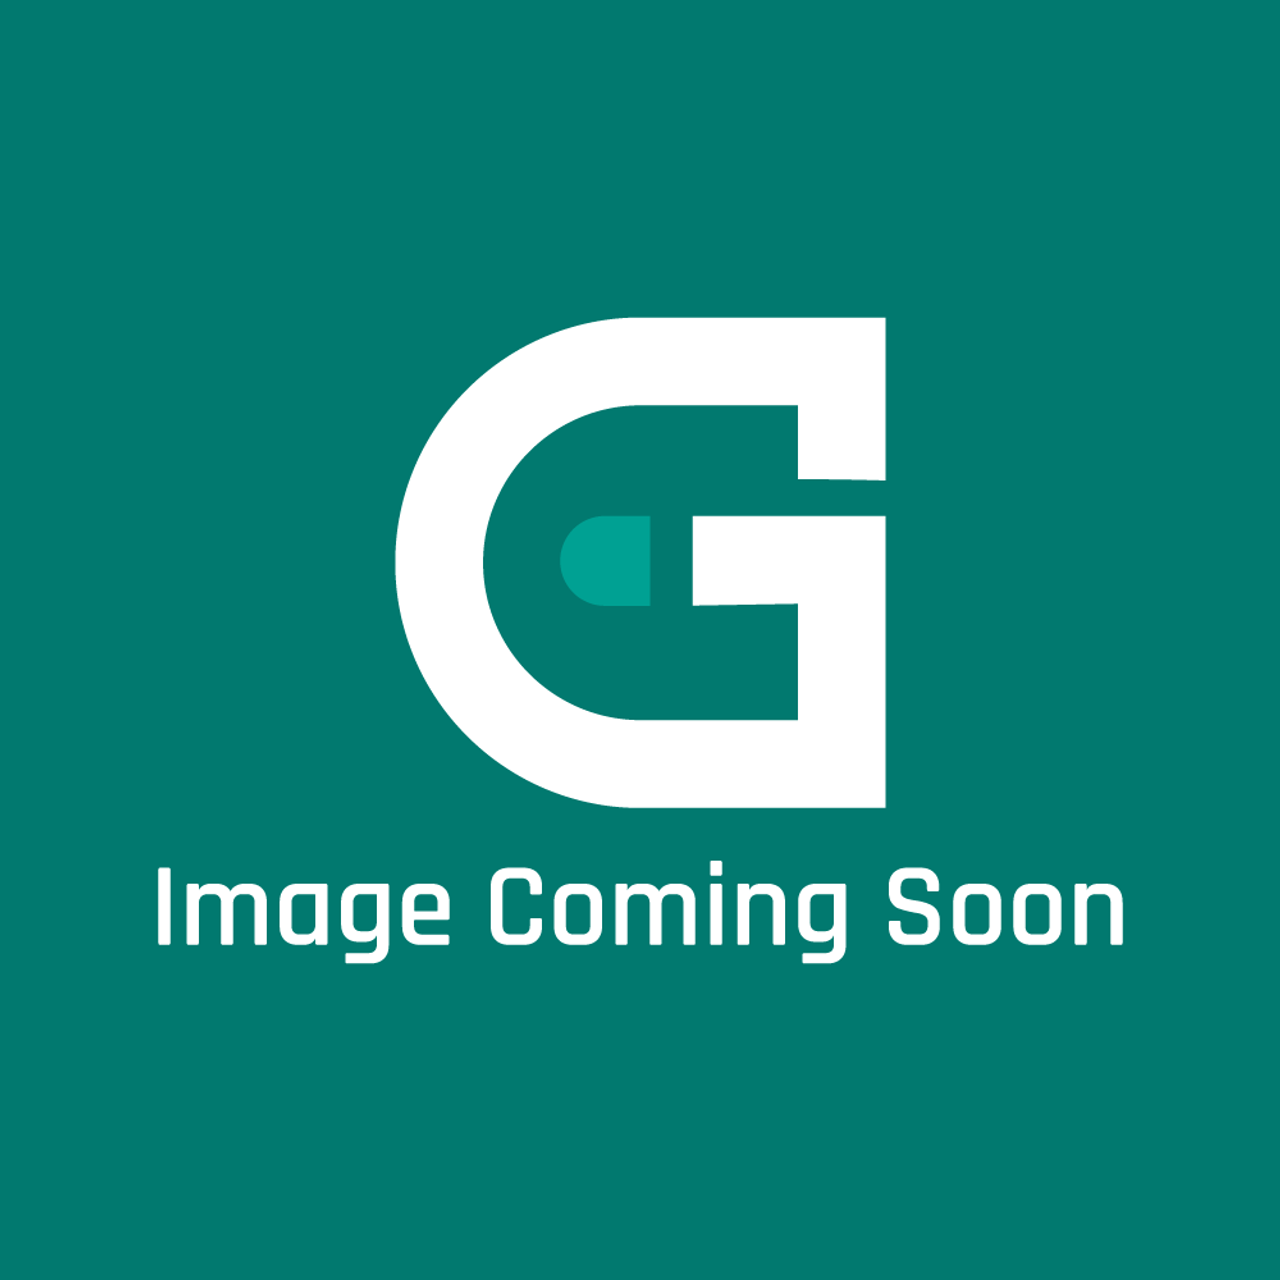 GE Appliances WP65X10016 - Brace - Image Coming Soon!